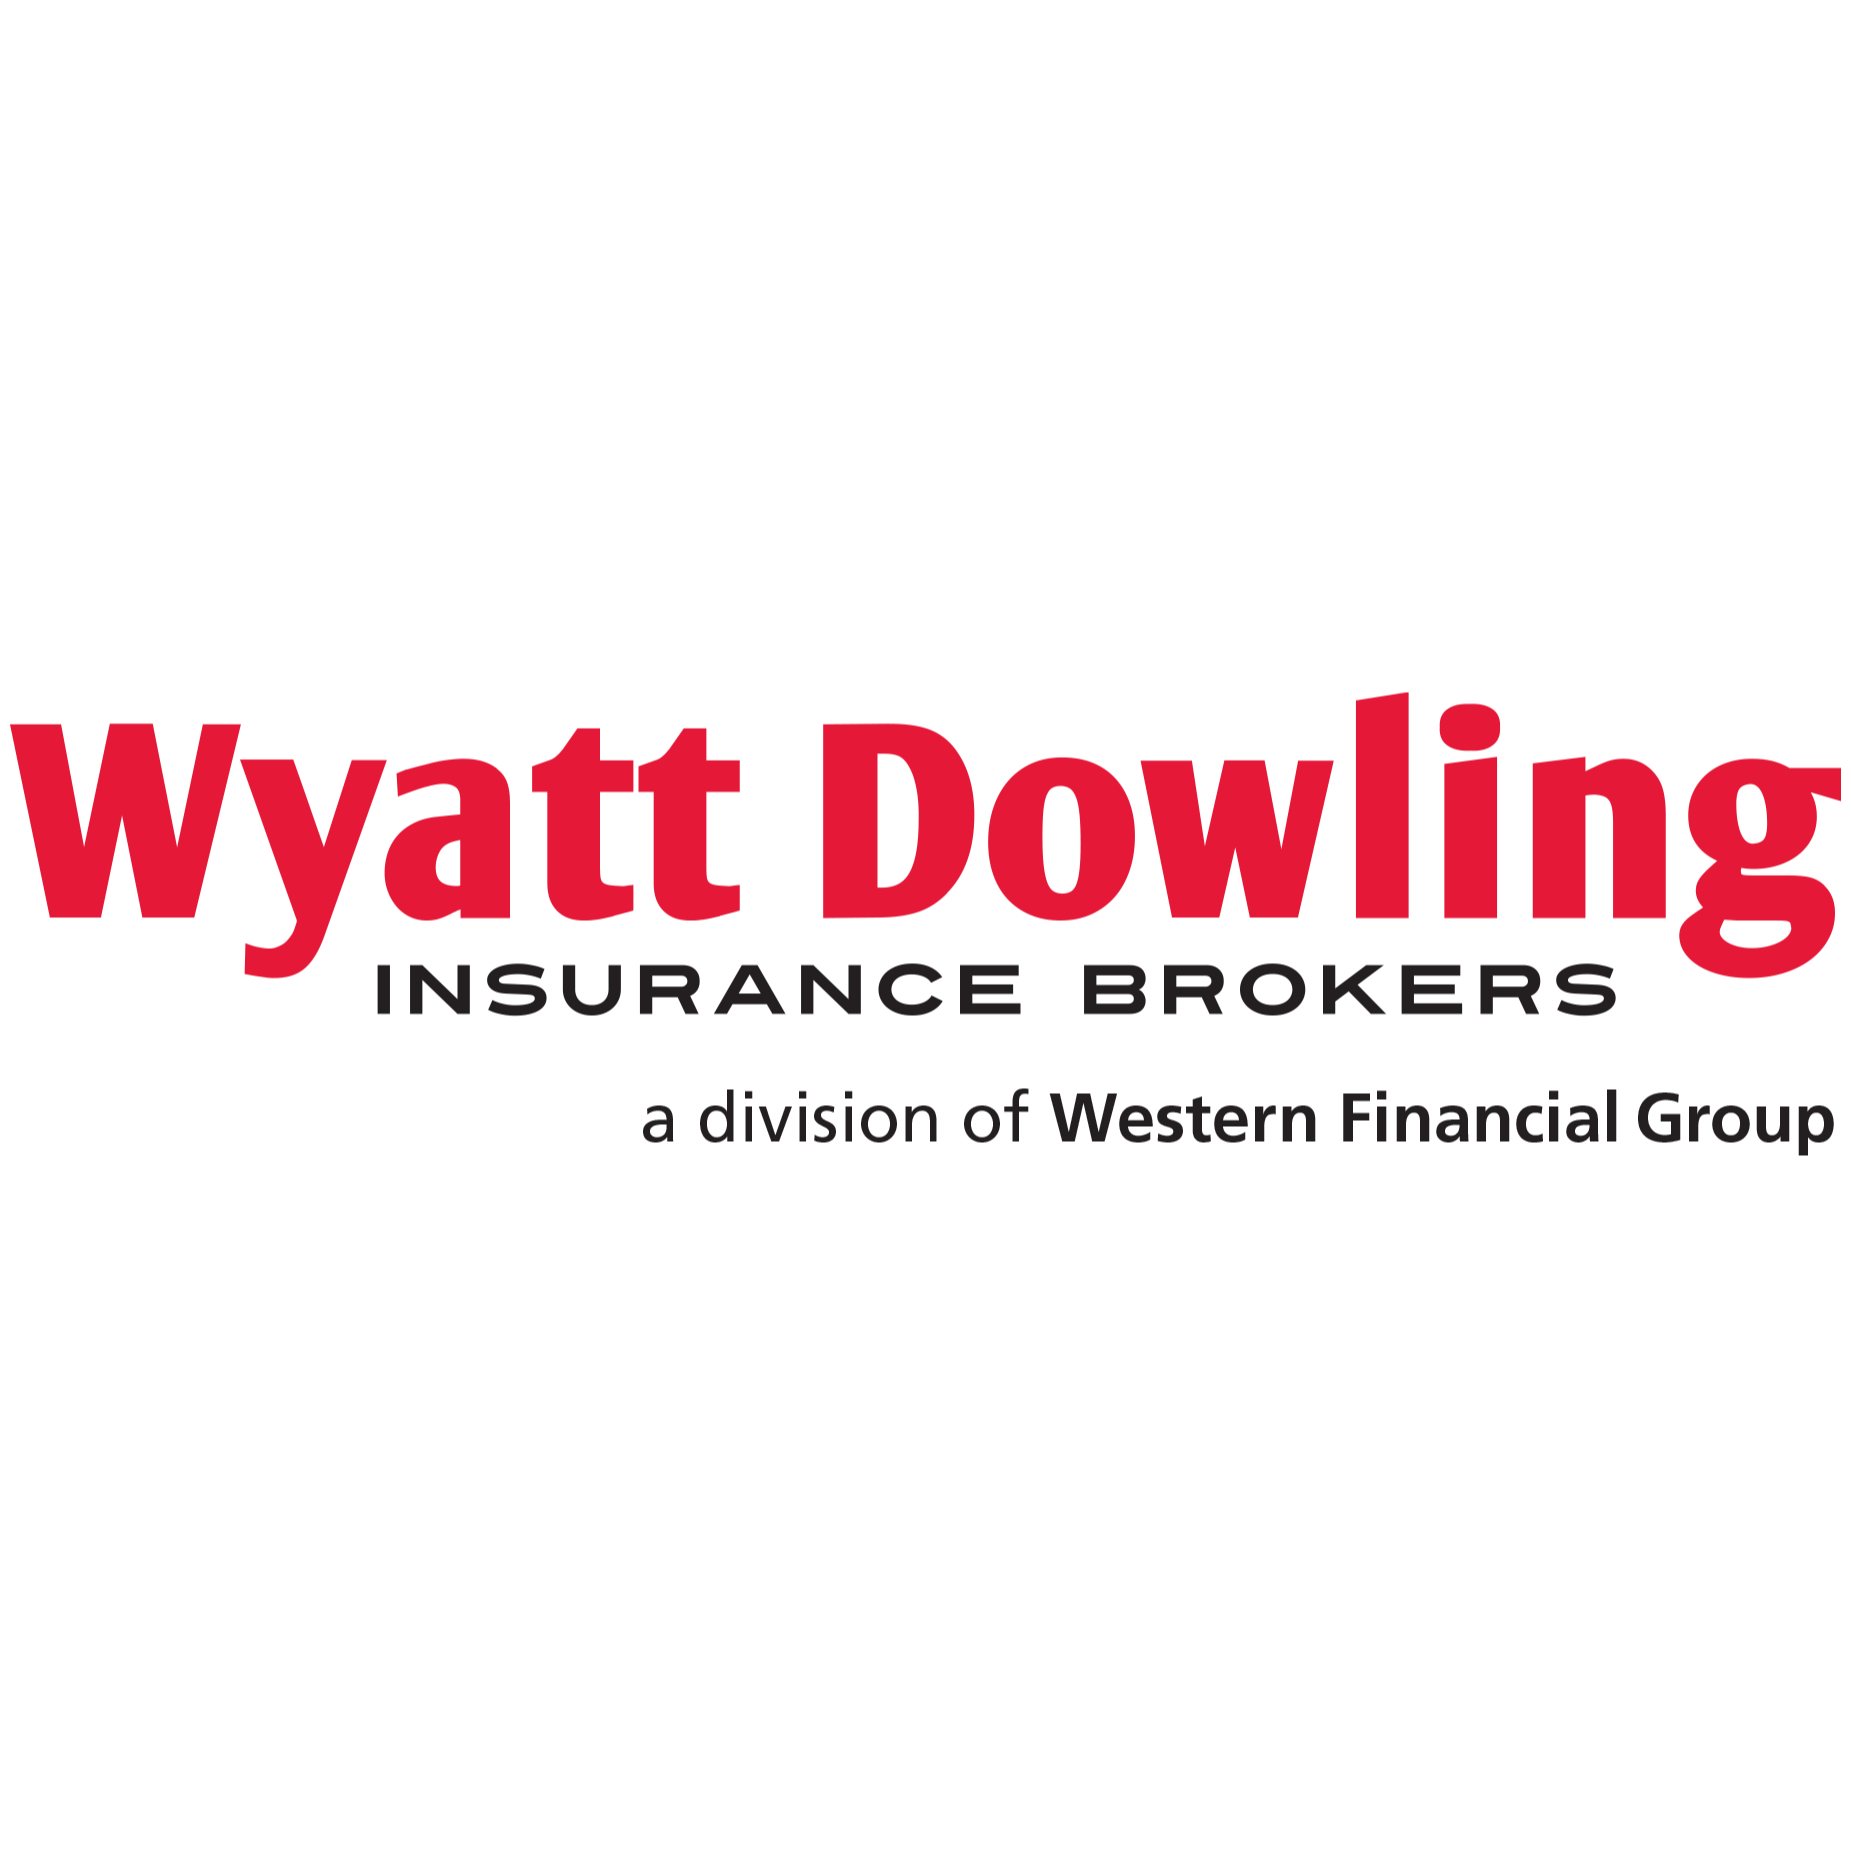 Wyatt Dowling Insurance Brokers - Conseillers en planification financière